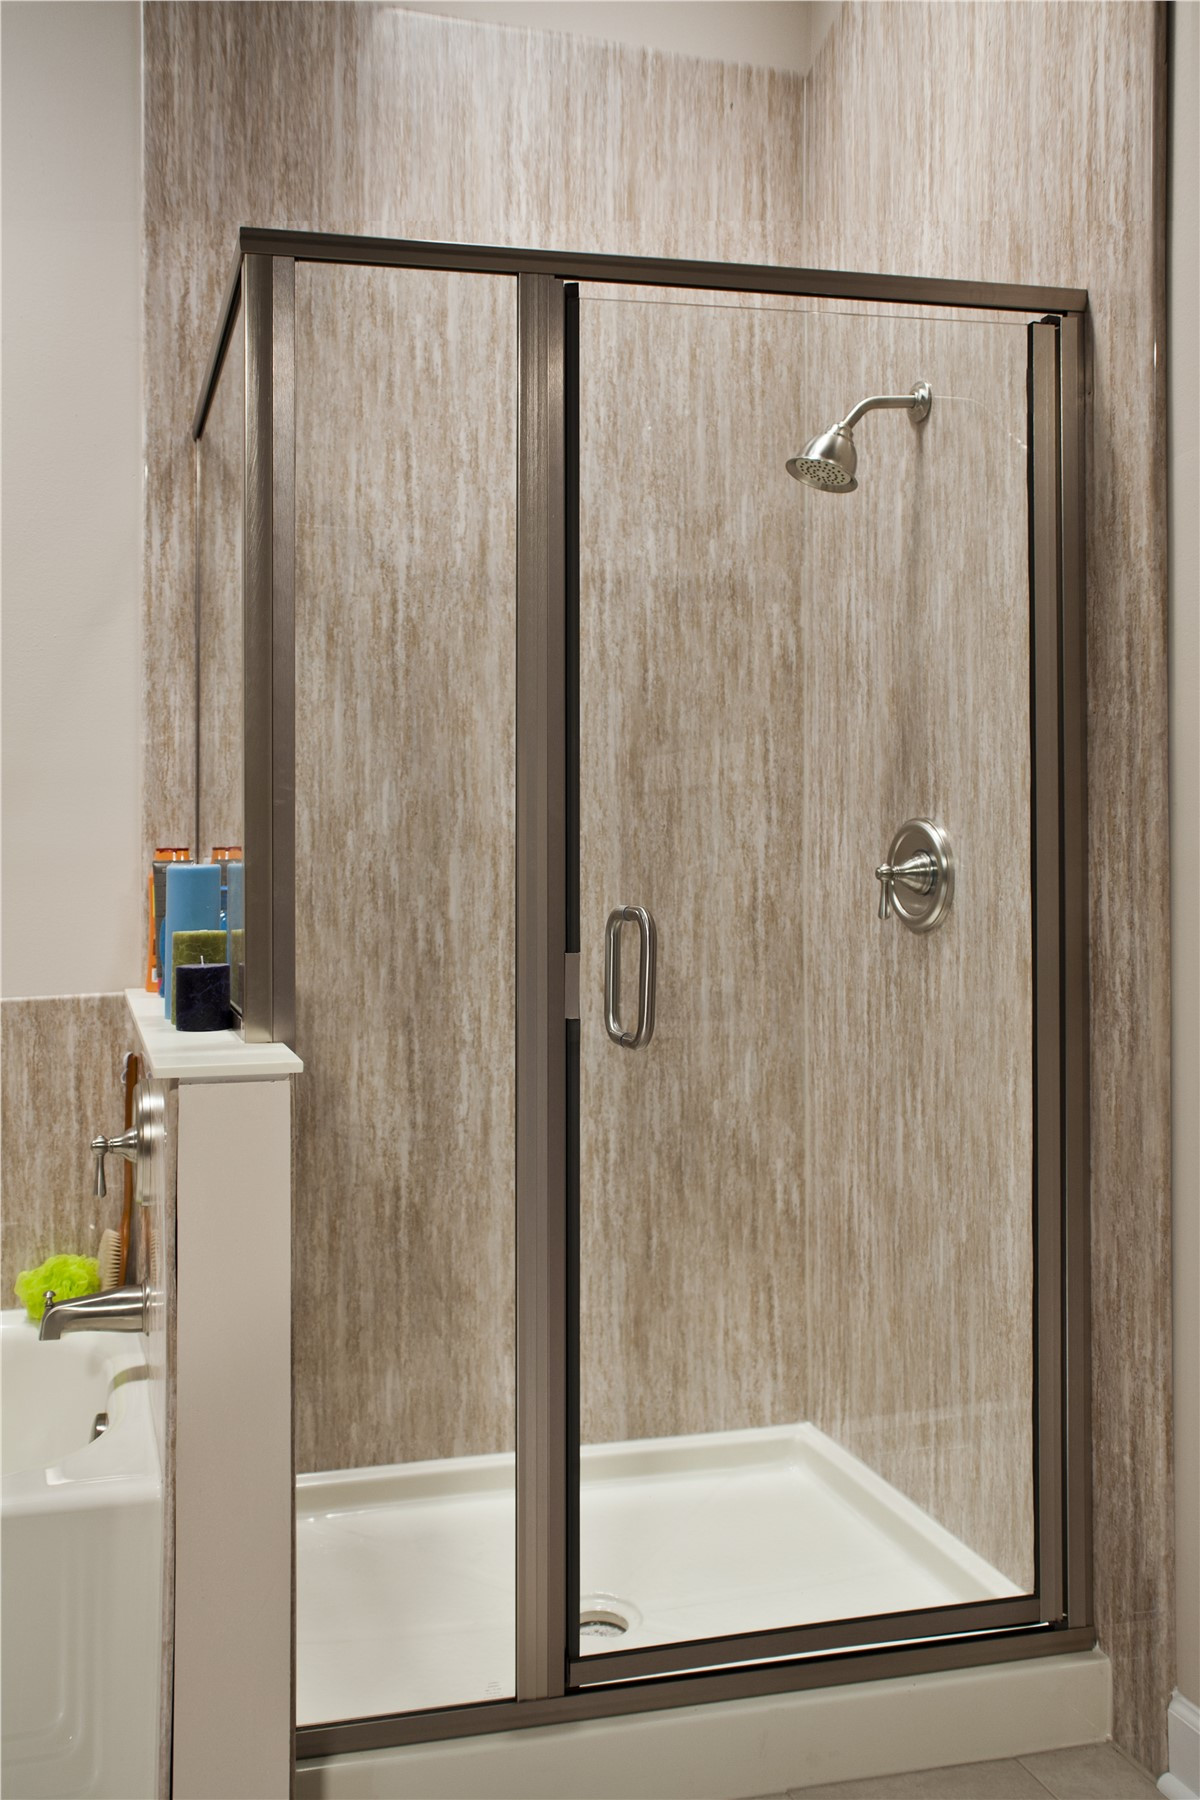 Bathroom Tile Replacement
 Shower Enclosures Shower Enclosure pany